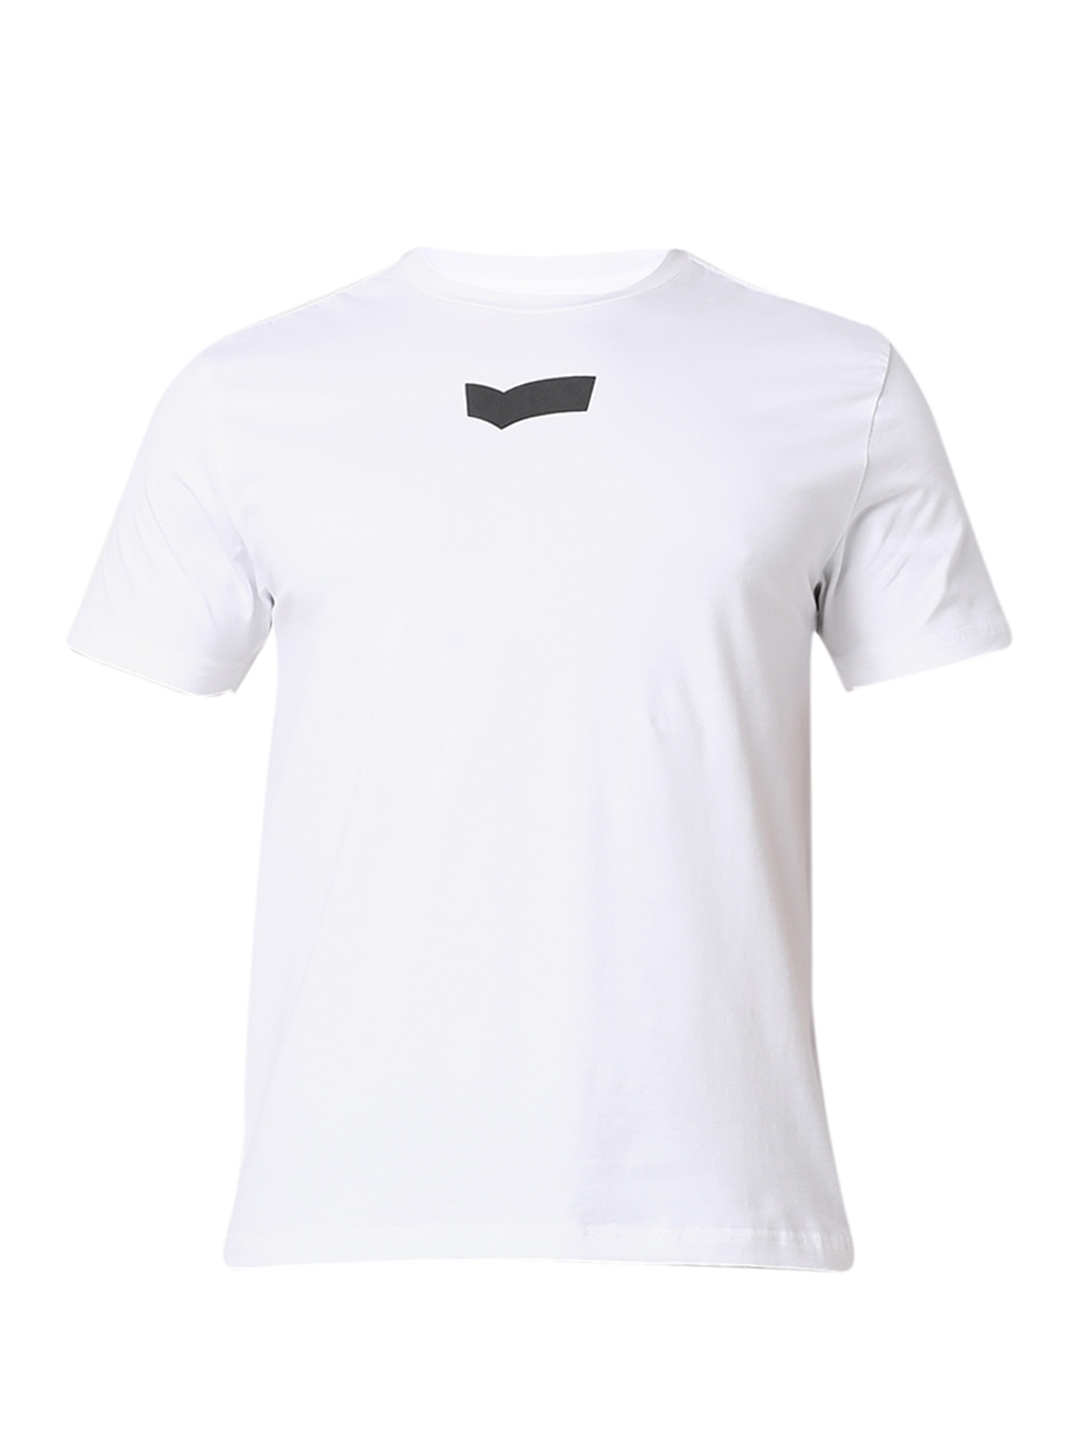 Boxy Fit Short Sleeve Crew Neck Brand Carrier Cotton Lycra T-Shirt